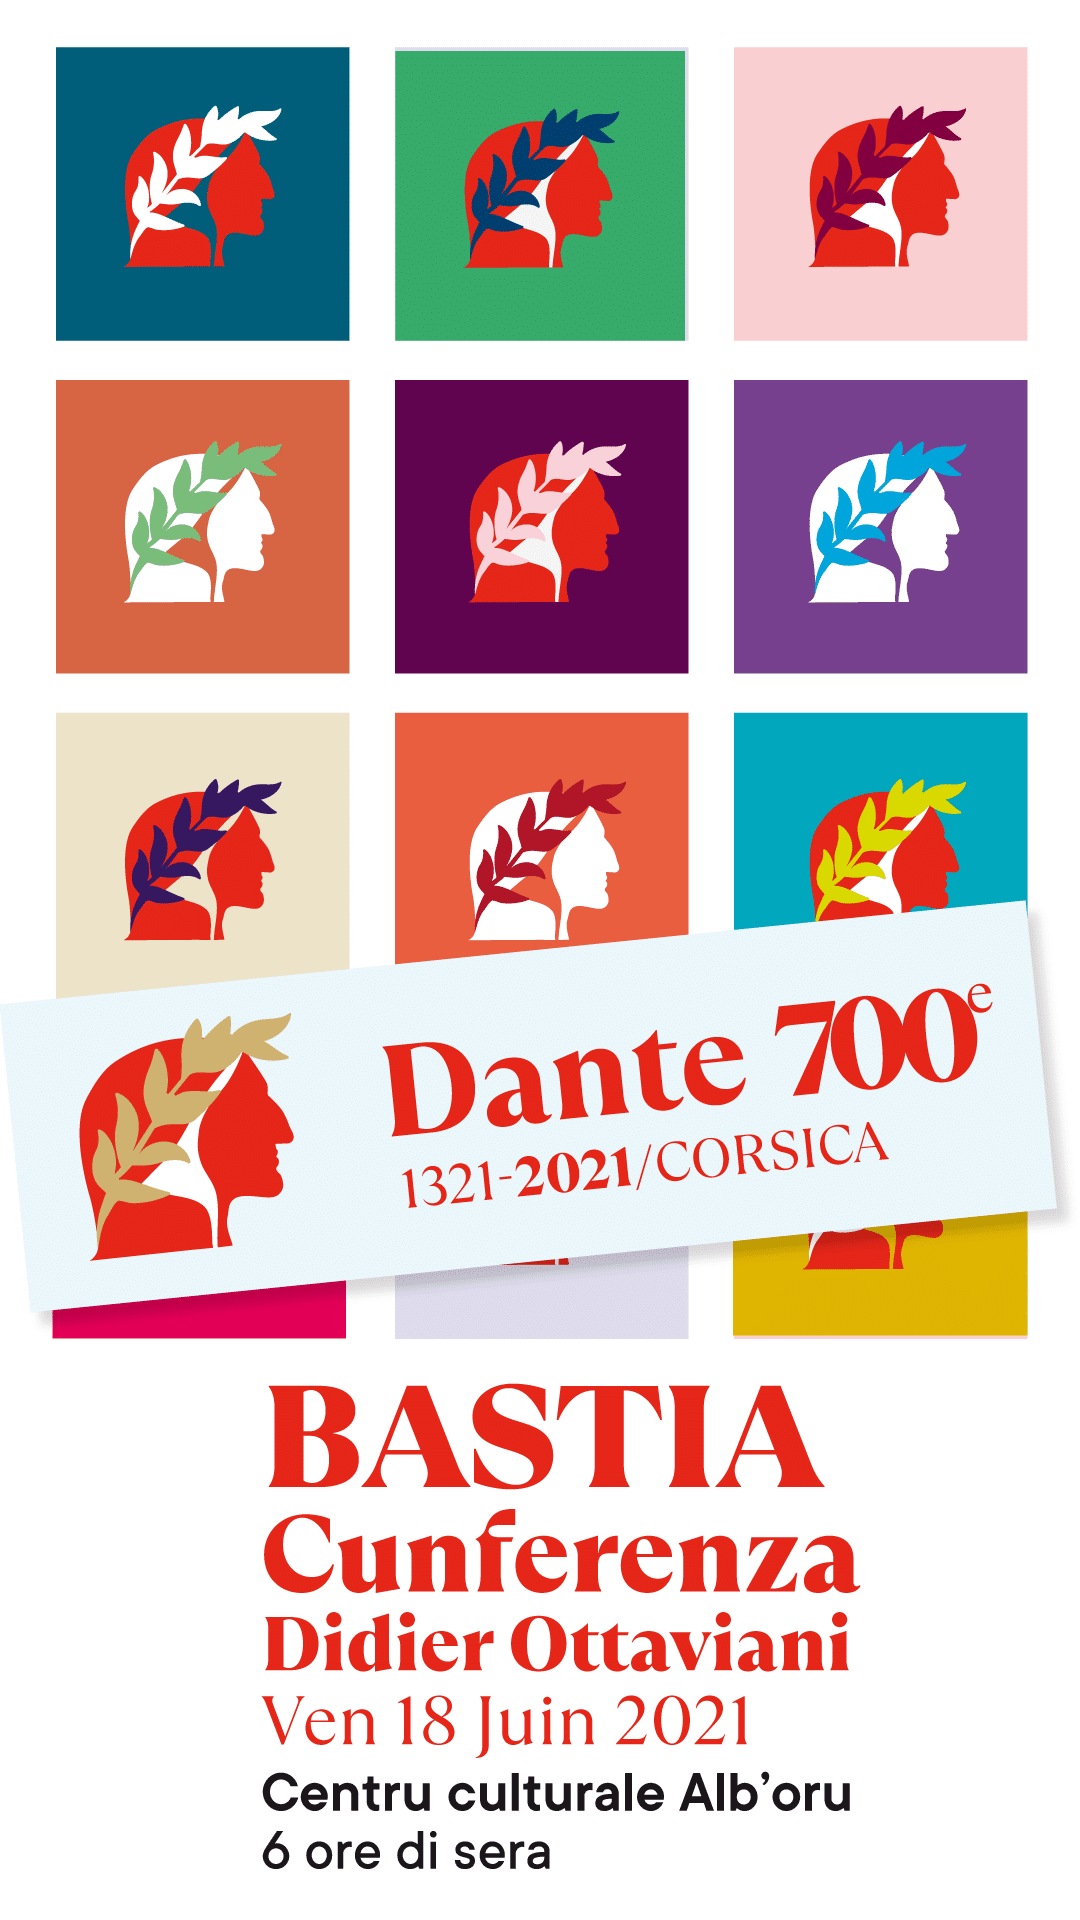 dante story - Logo et Identité visuelle Dante 700e Dantissimu !